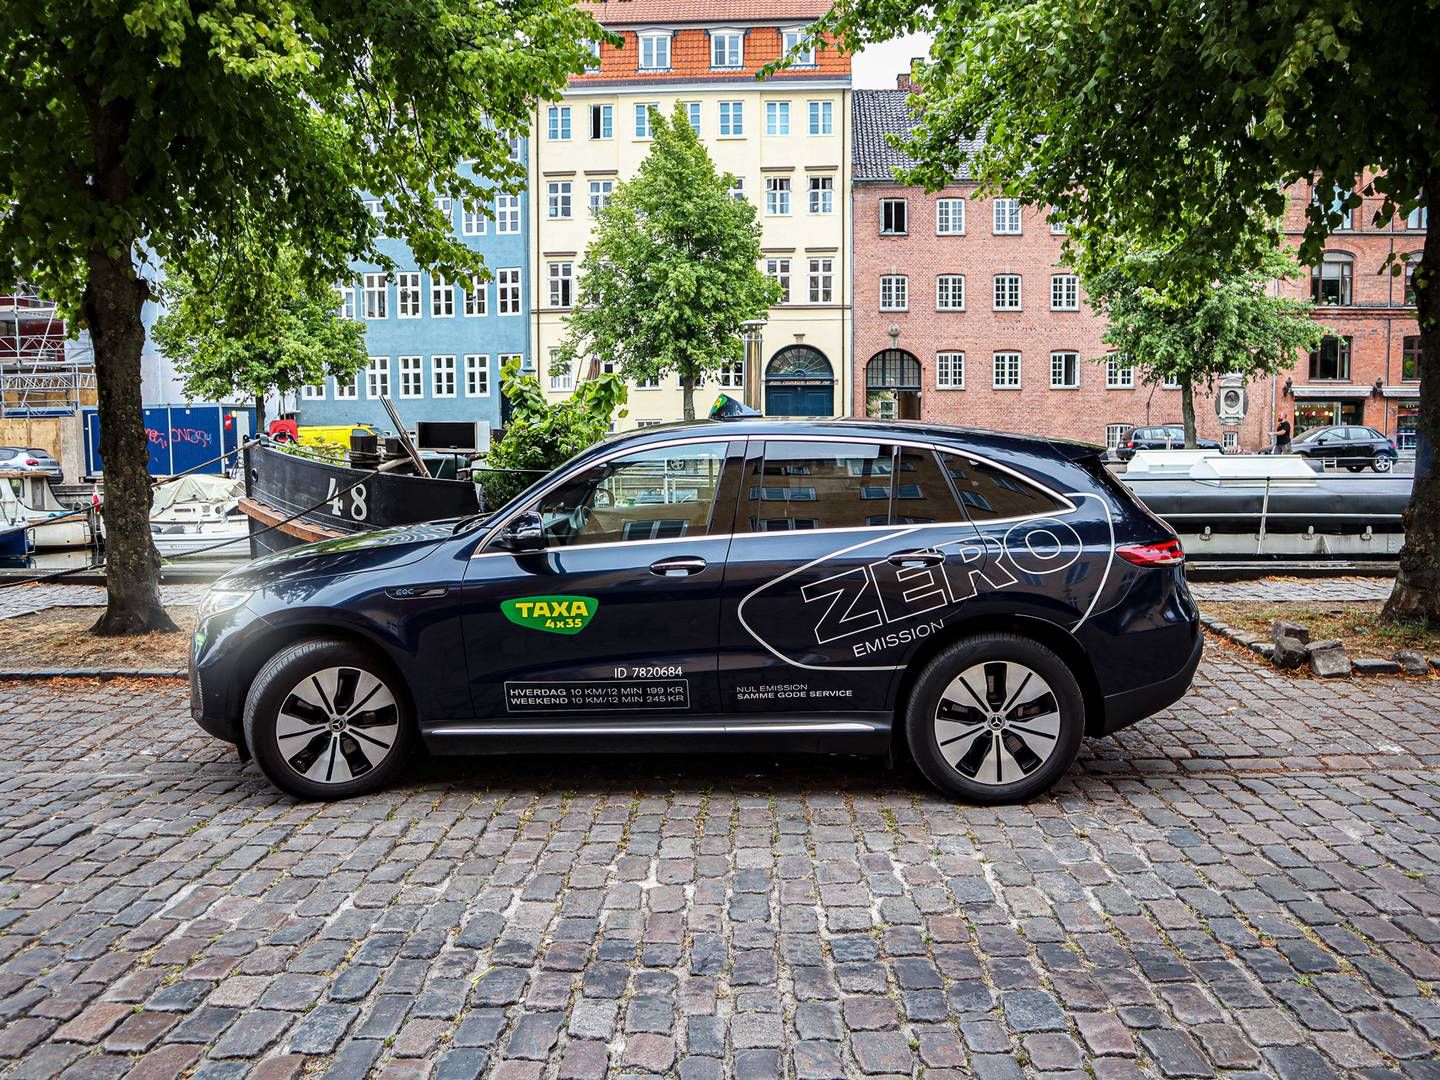 Dette forår har Taxa 4x35 entreret både Aarhus og Odense, hvor man har indsat 10 biler i begge byer | Foto: PR / Taxa 4x35